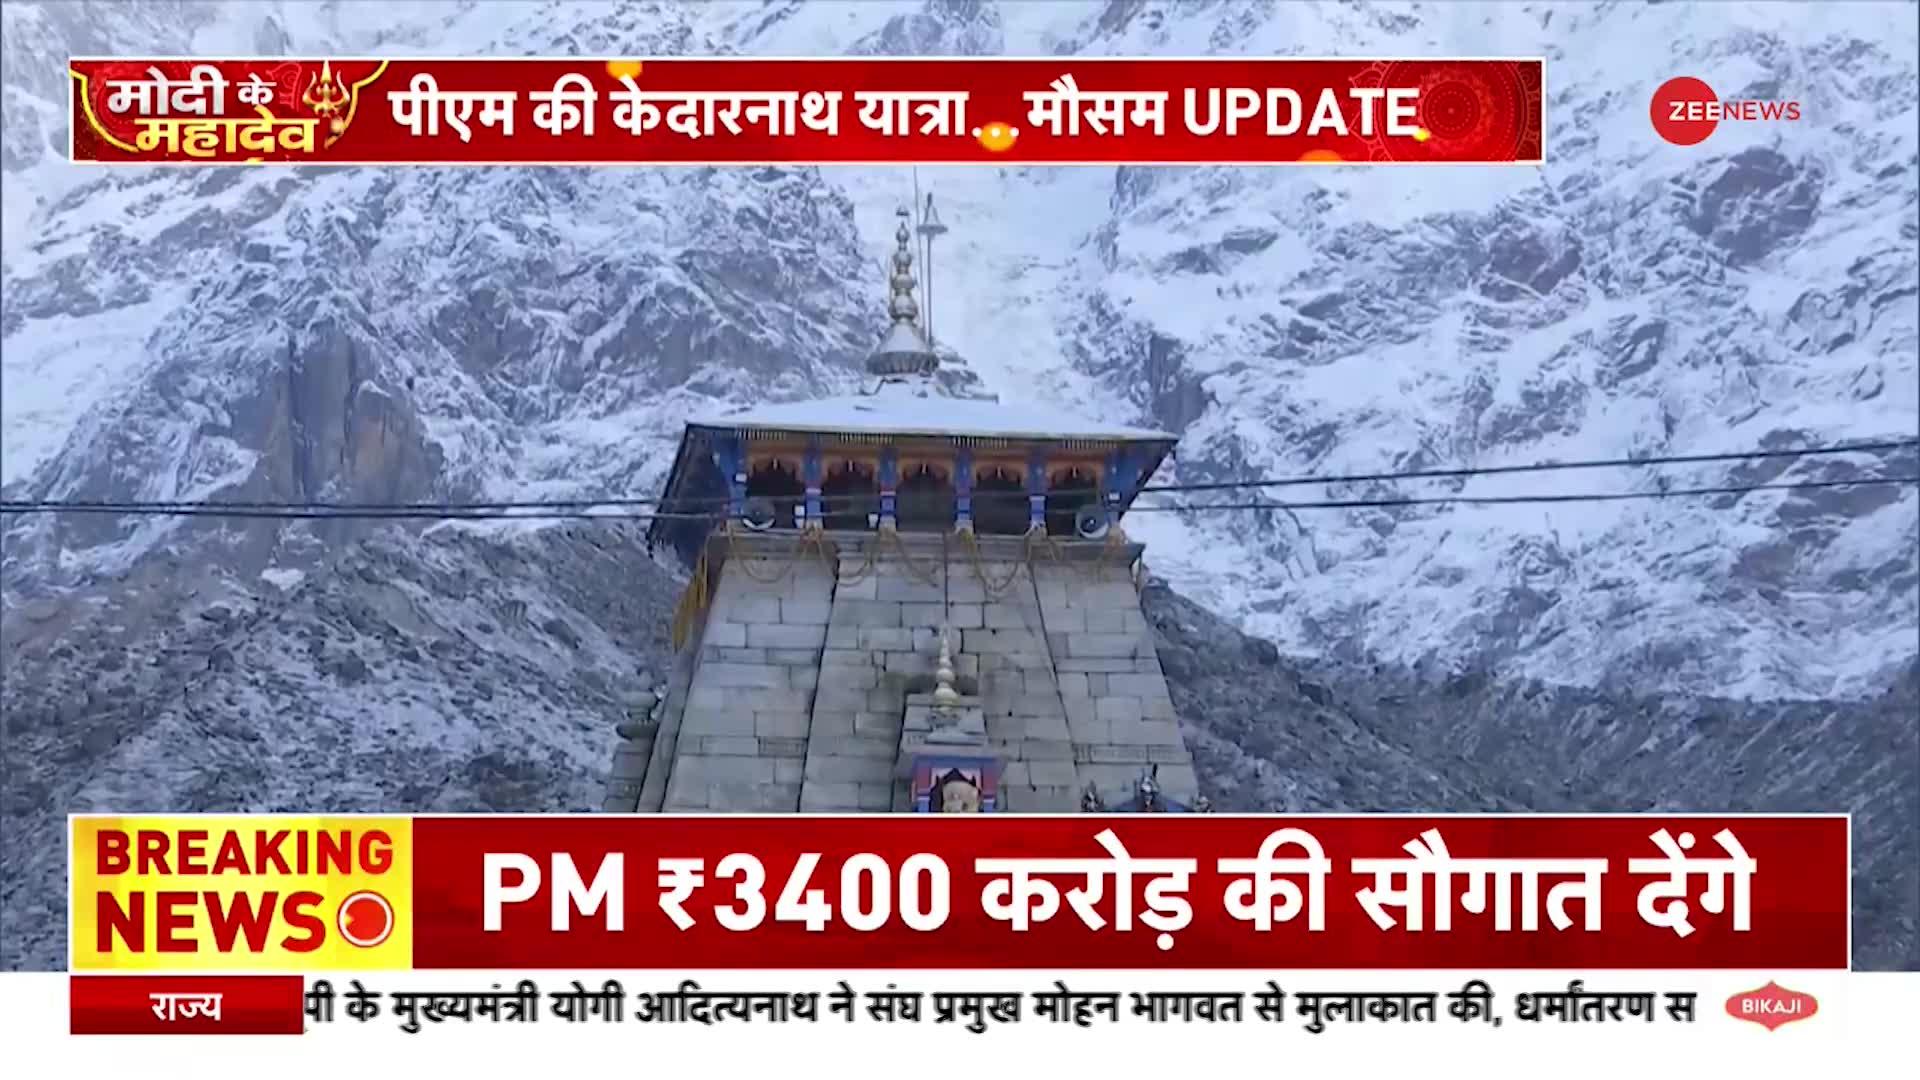 PM Modi Uttarakhand Visit: पीएम की केदरनाथ यात्रा... मौसम UPDATE